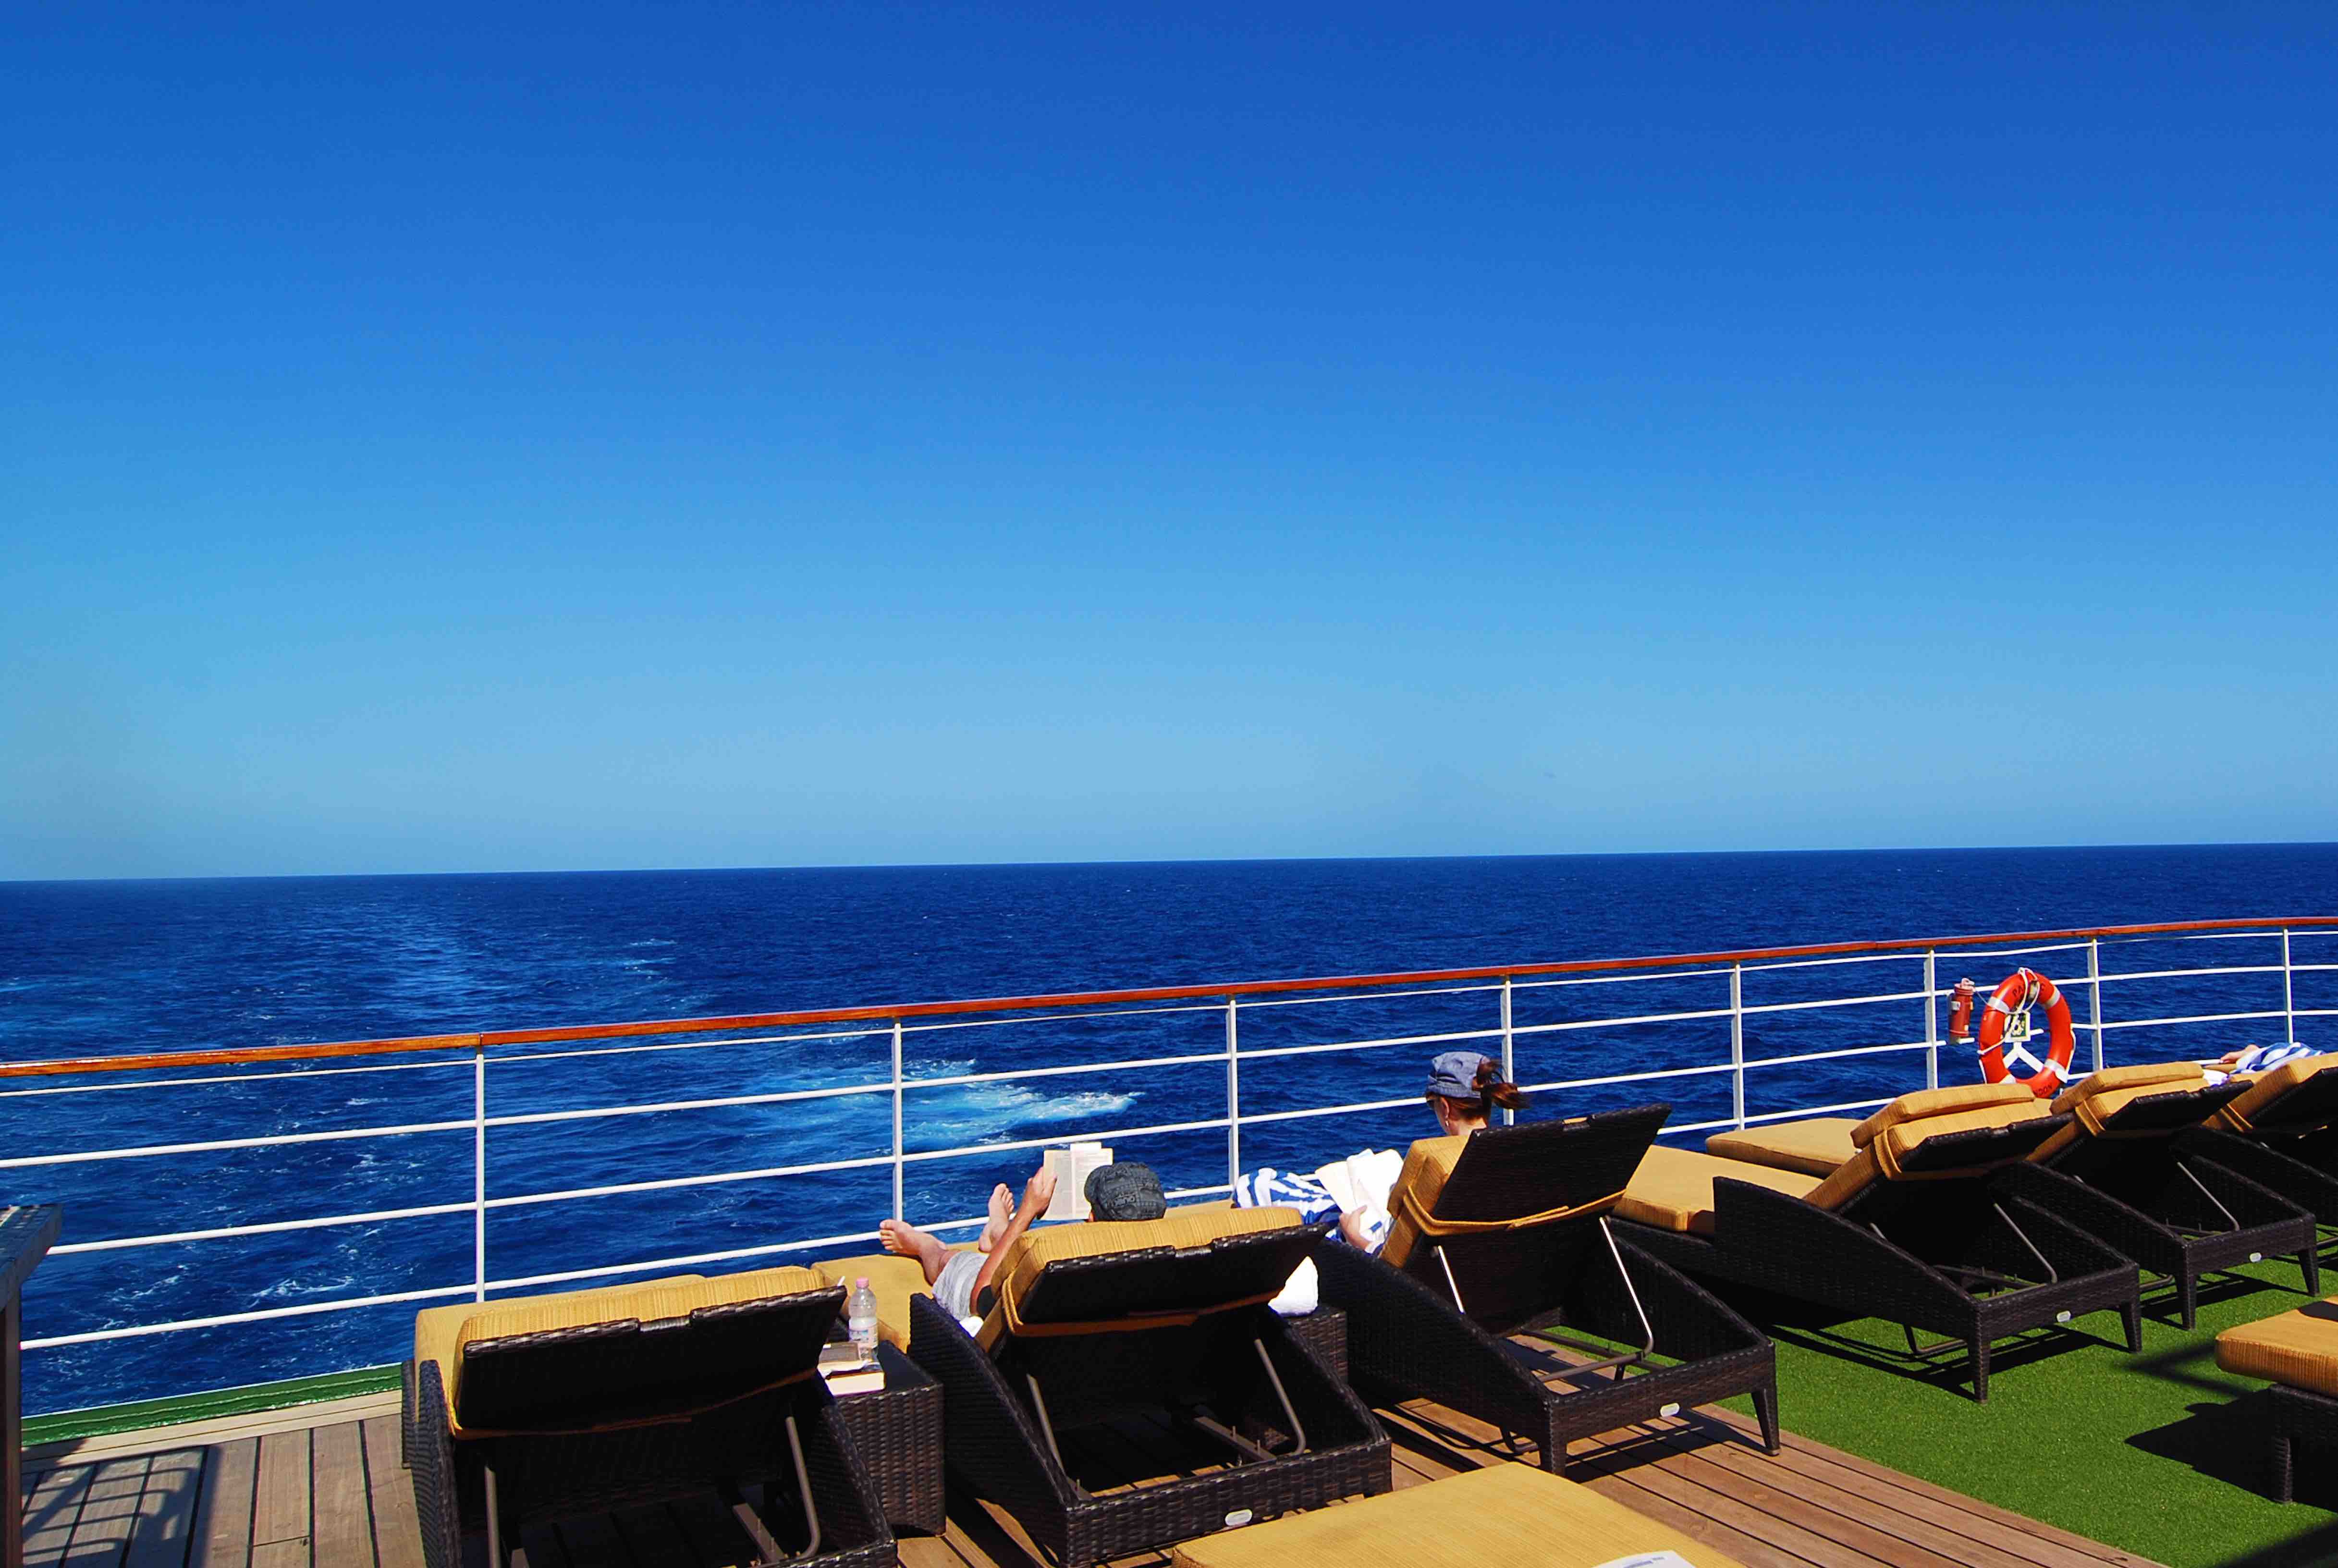 Why Cruises Are So Popular in Australia